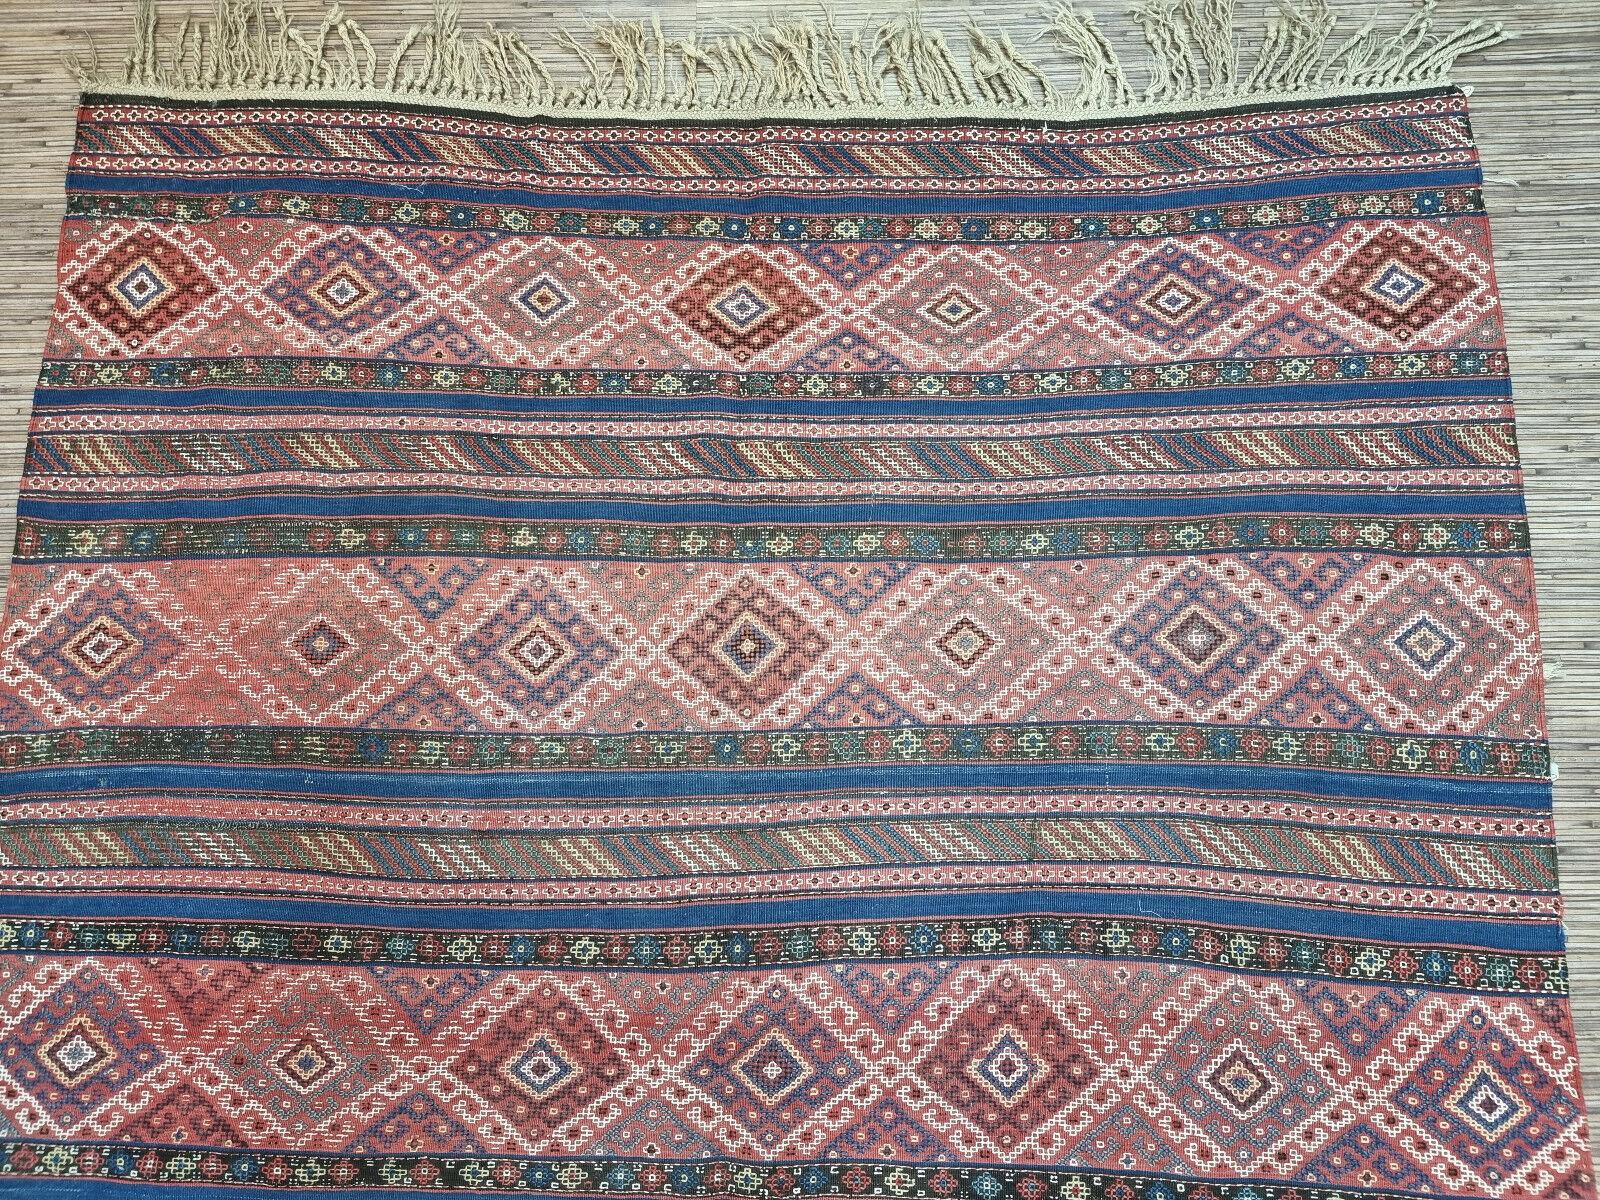 Early 20th Century Handmade Antique Persian Style Sumak Kilim Rug 5.4' x 7', 1920s - 1D86